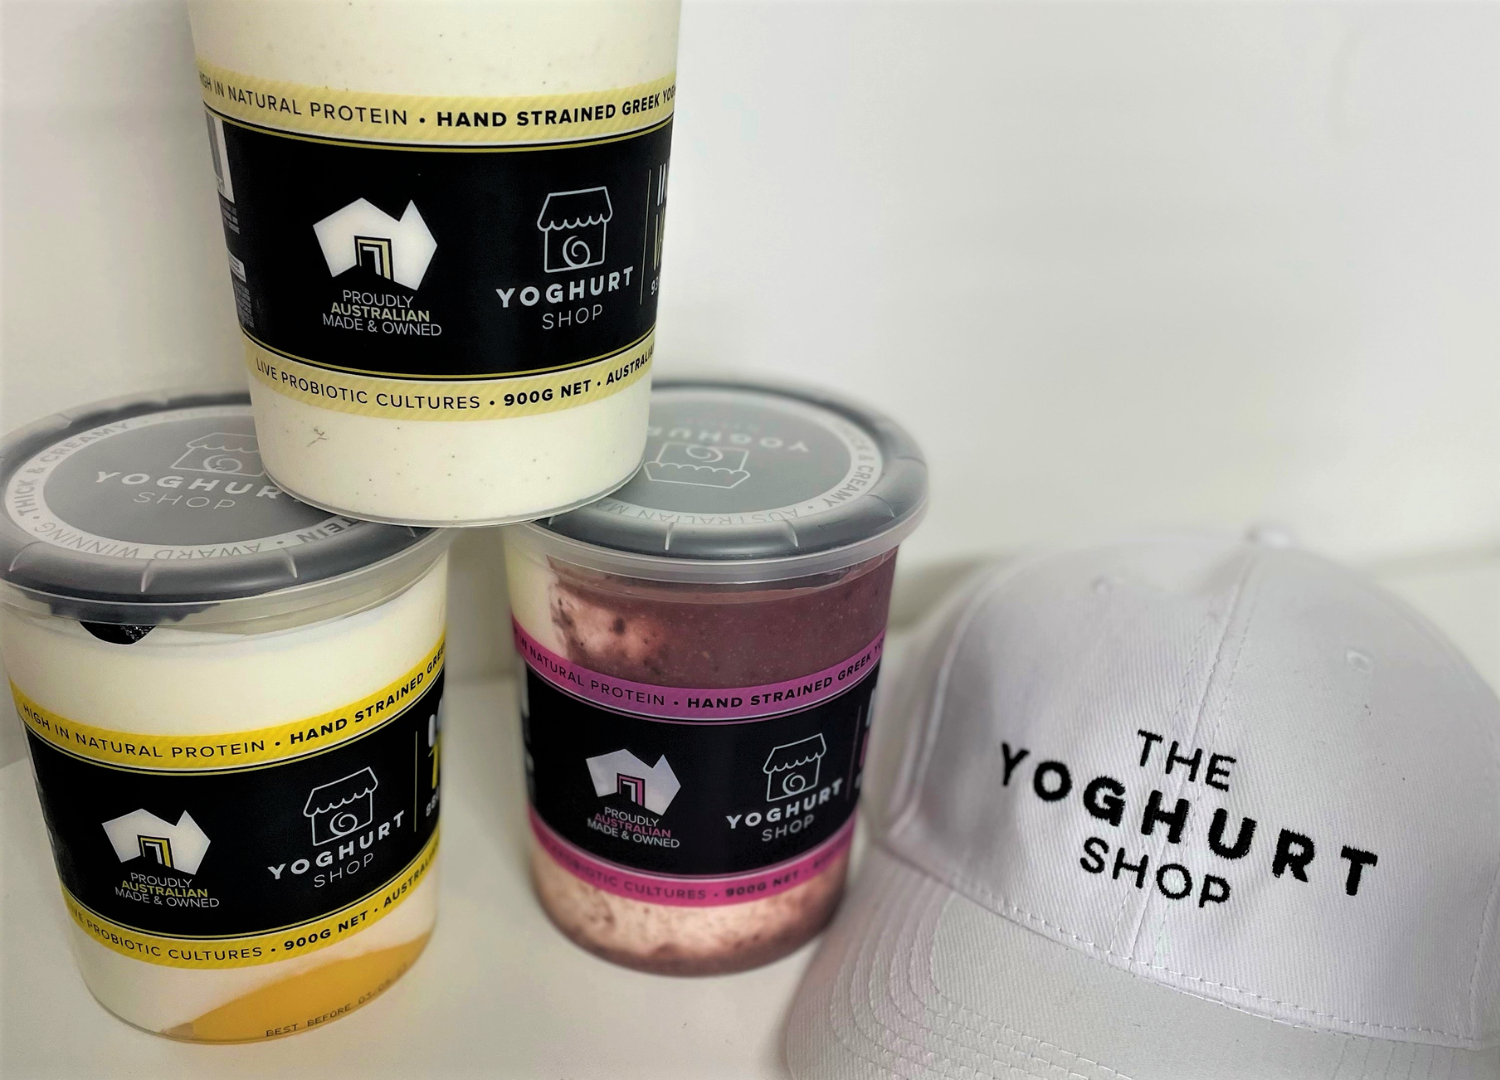 Yoghurt shop